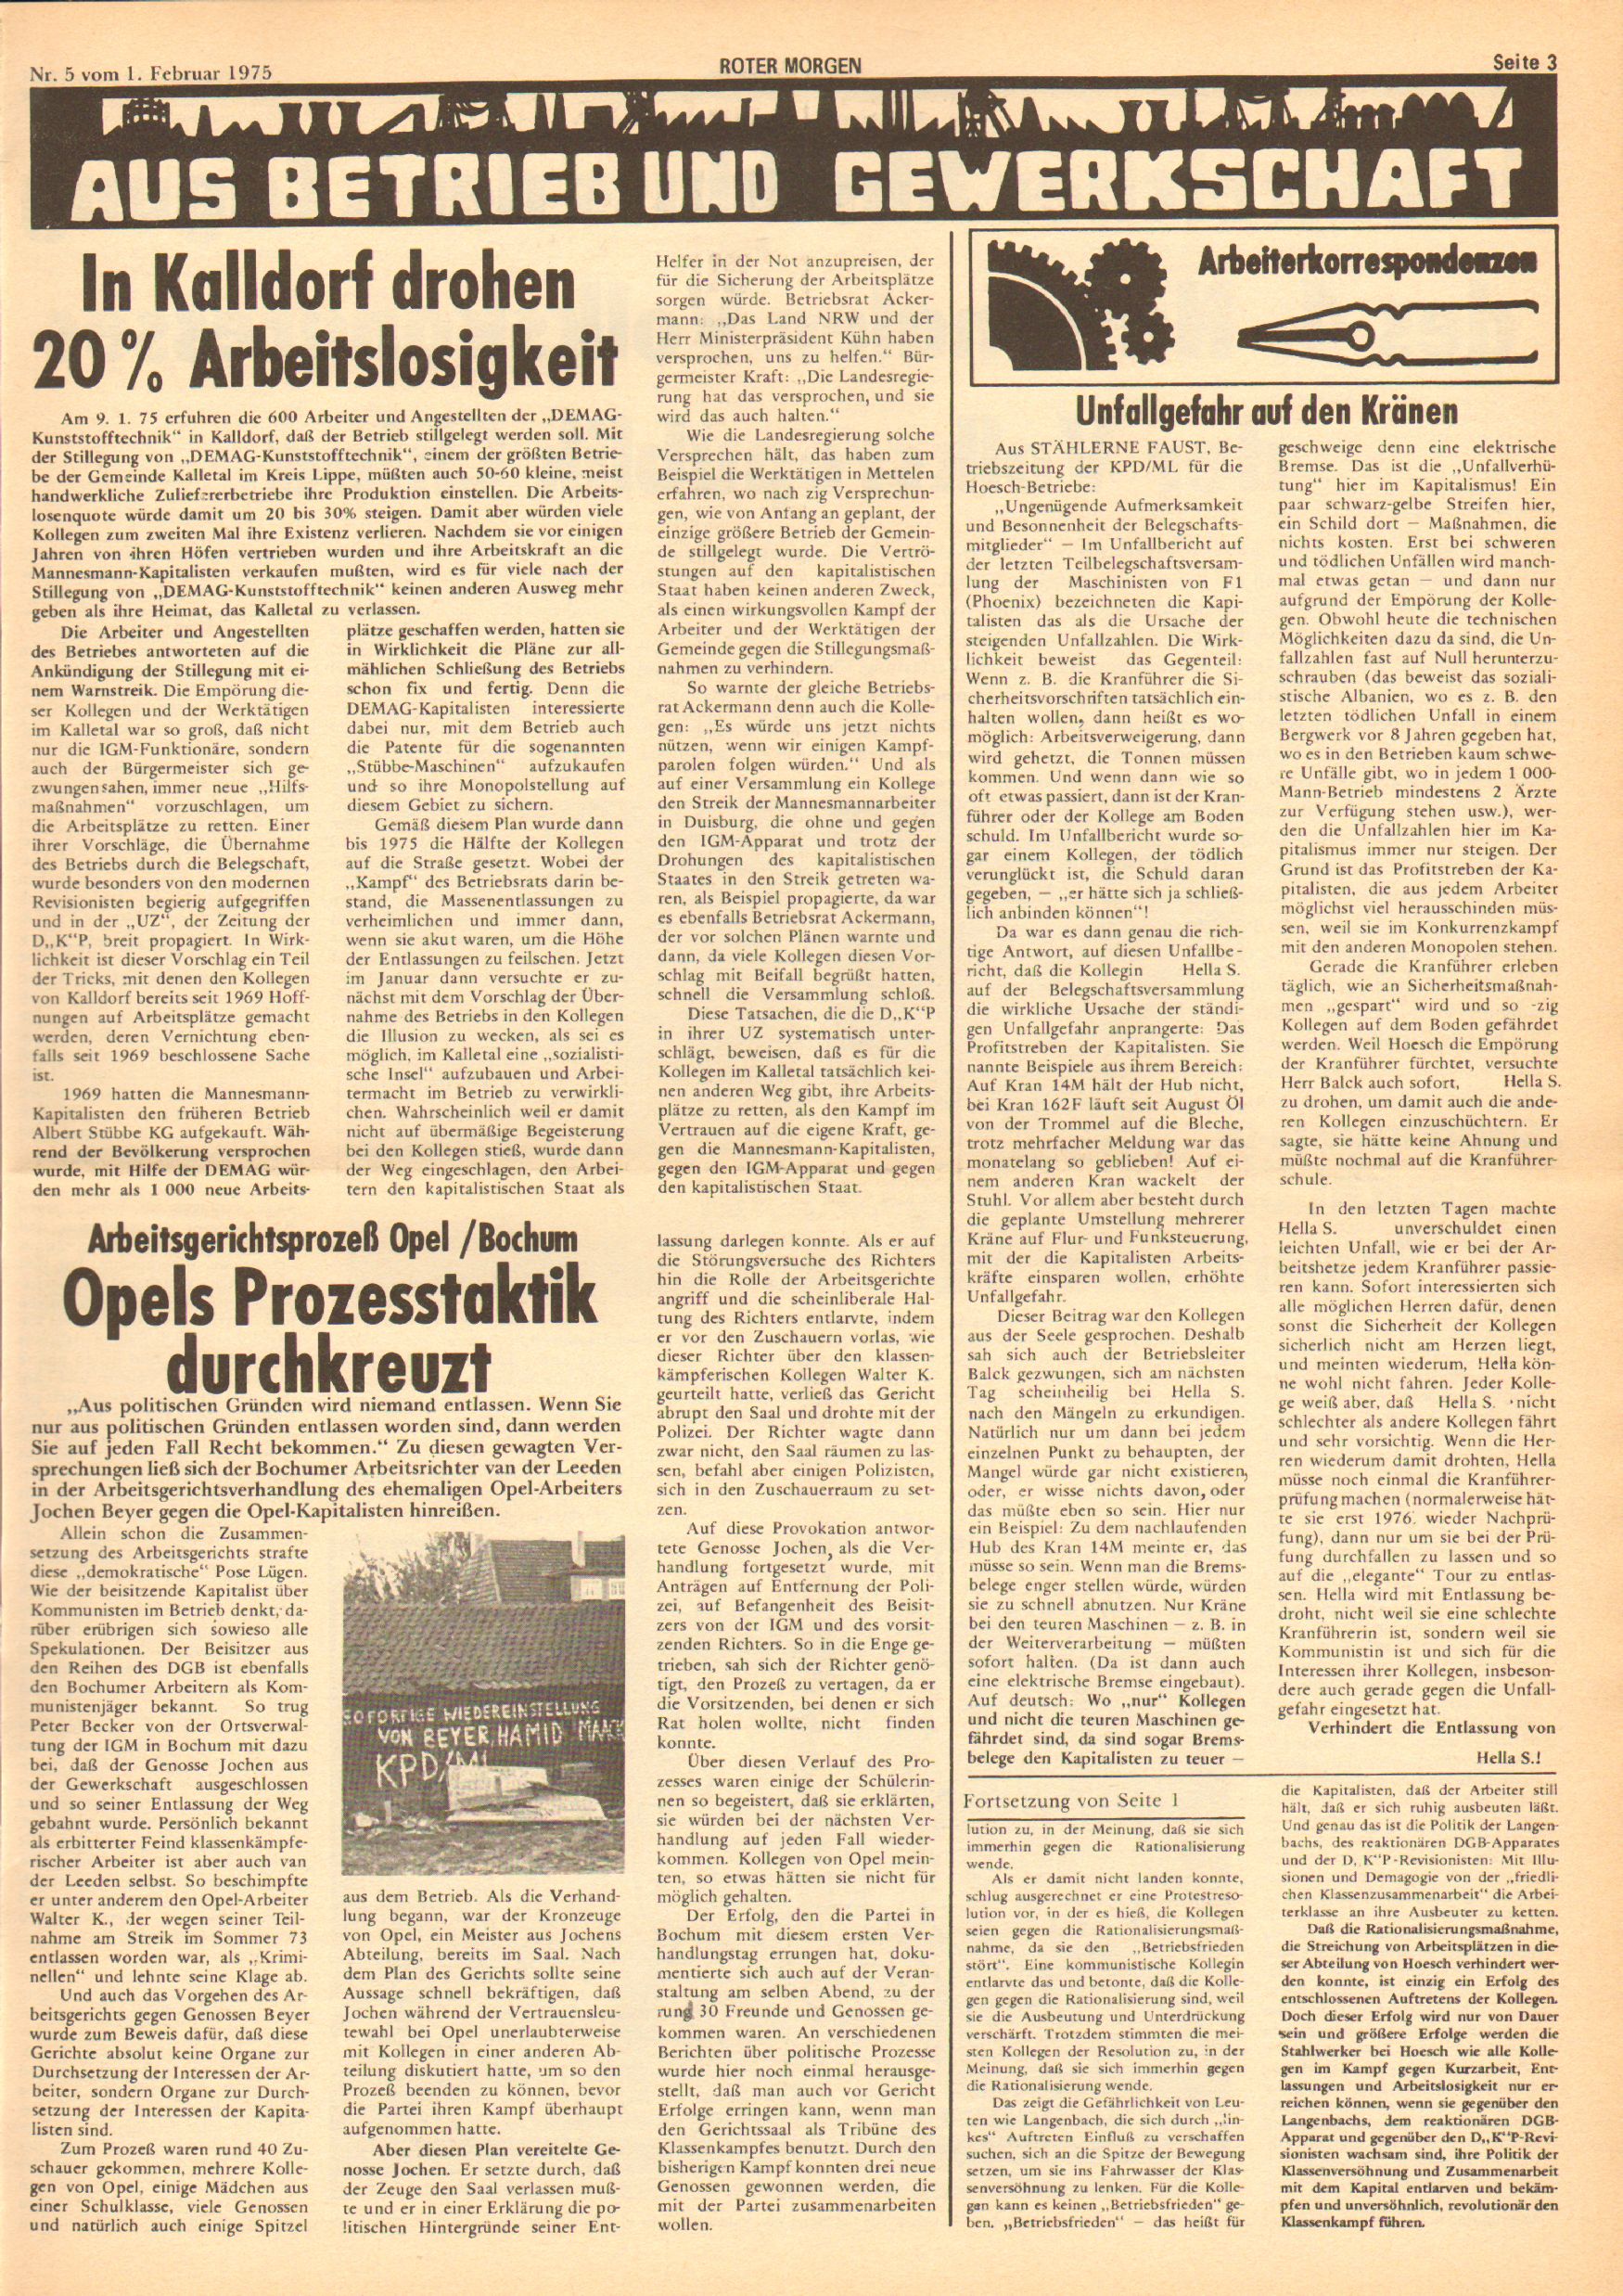 Roter Morgen, 9. Jg., 1. Februar 1975, Nr. 5, Seite 3